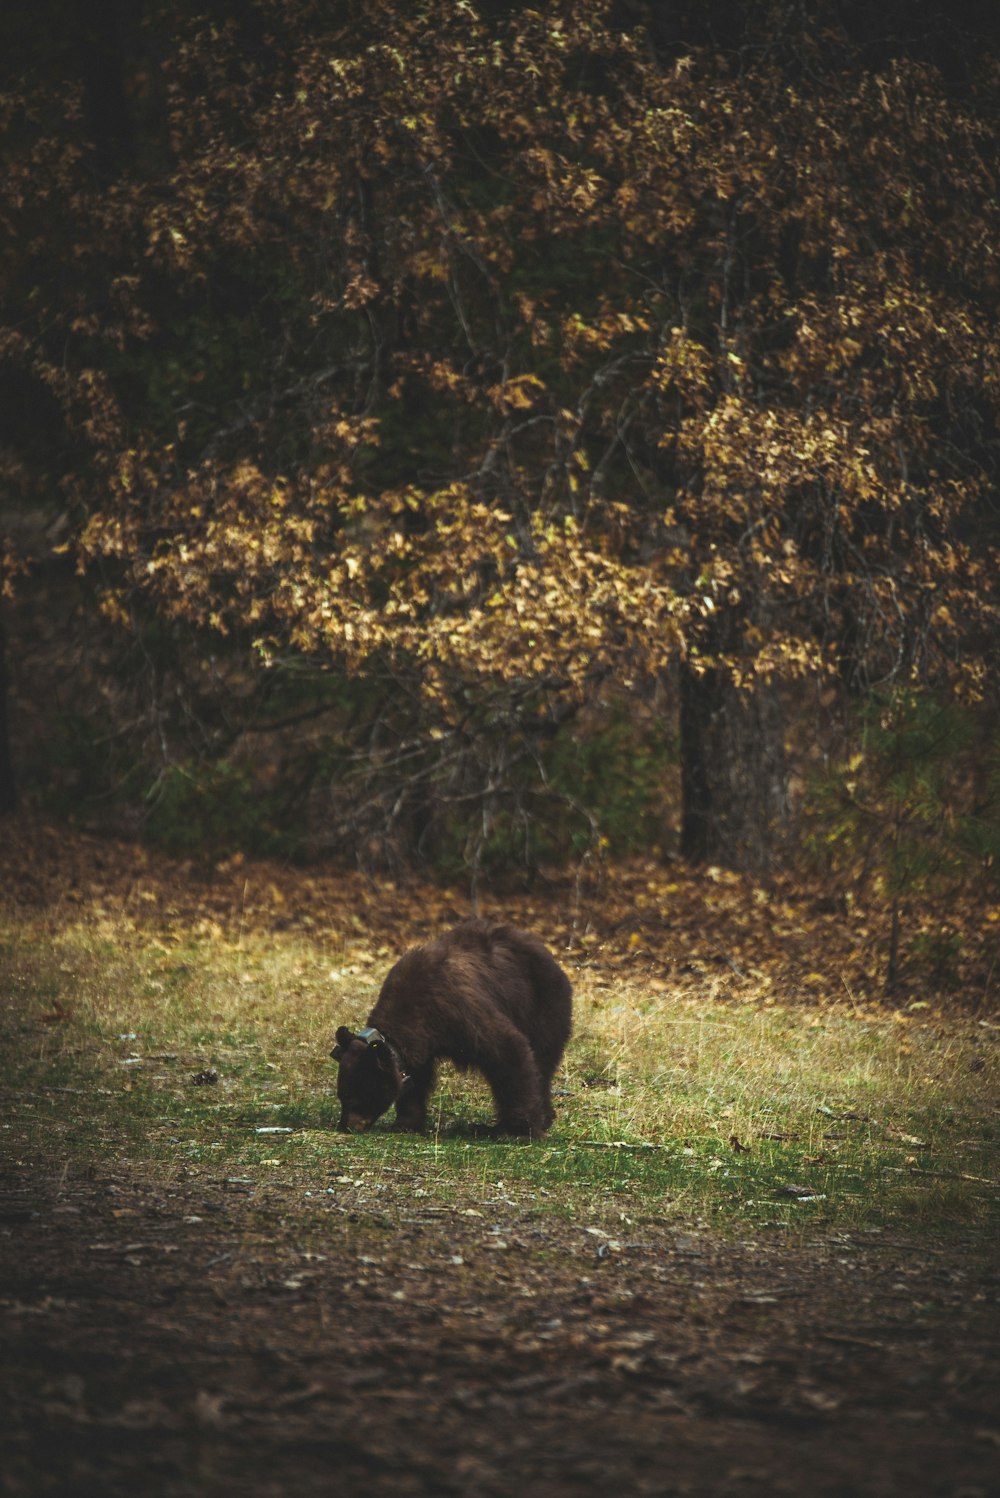 brown bear on green grass near trees